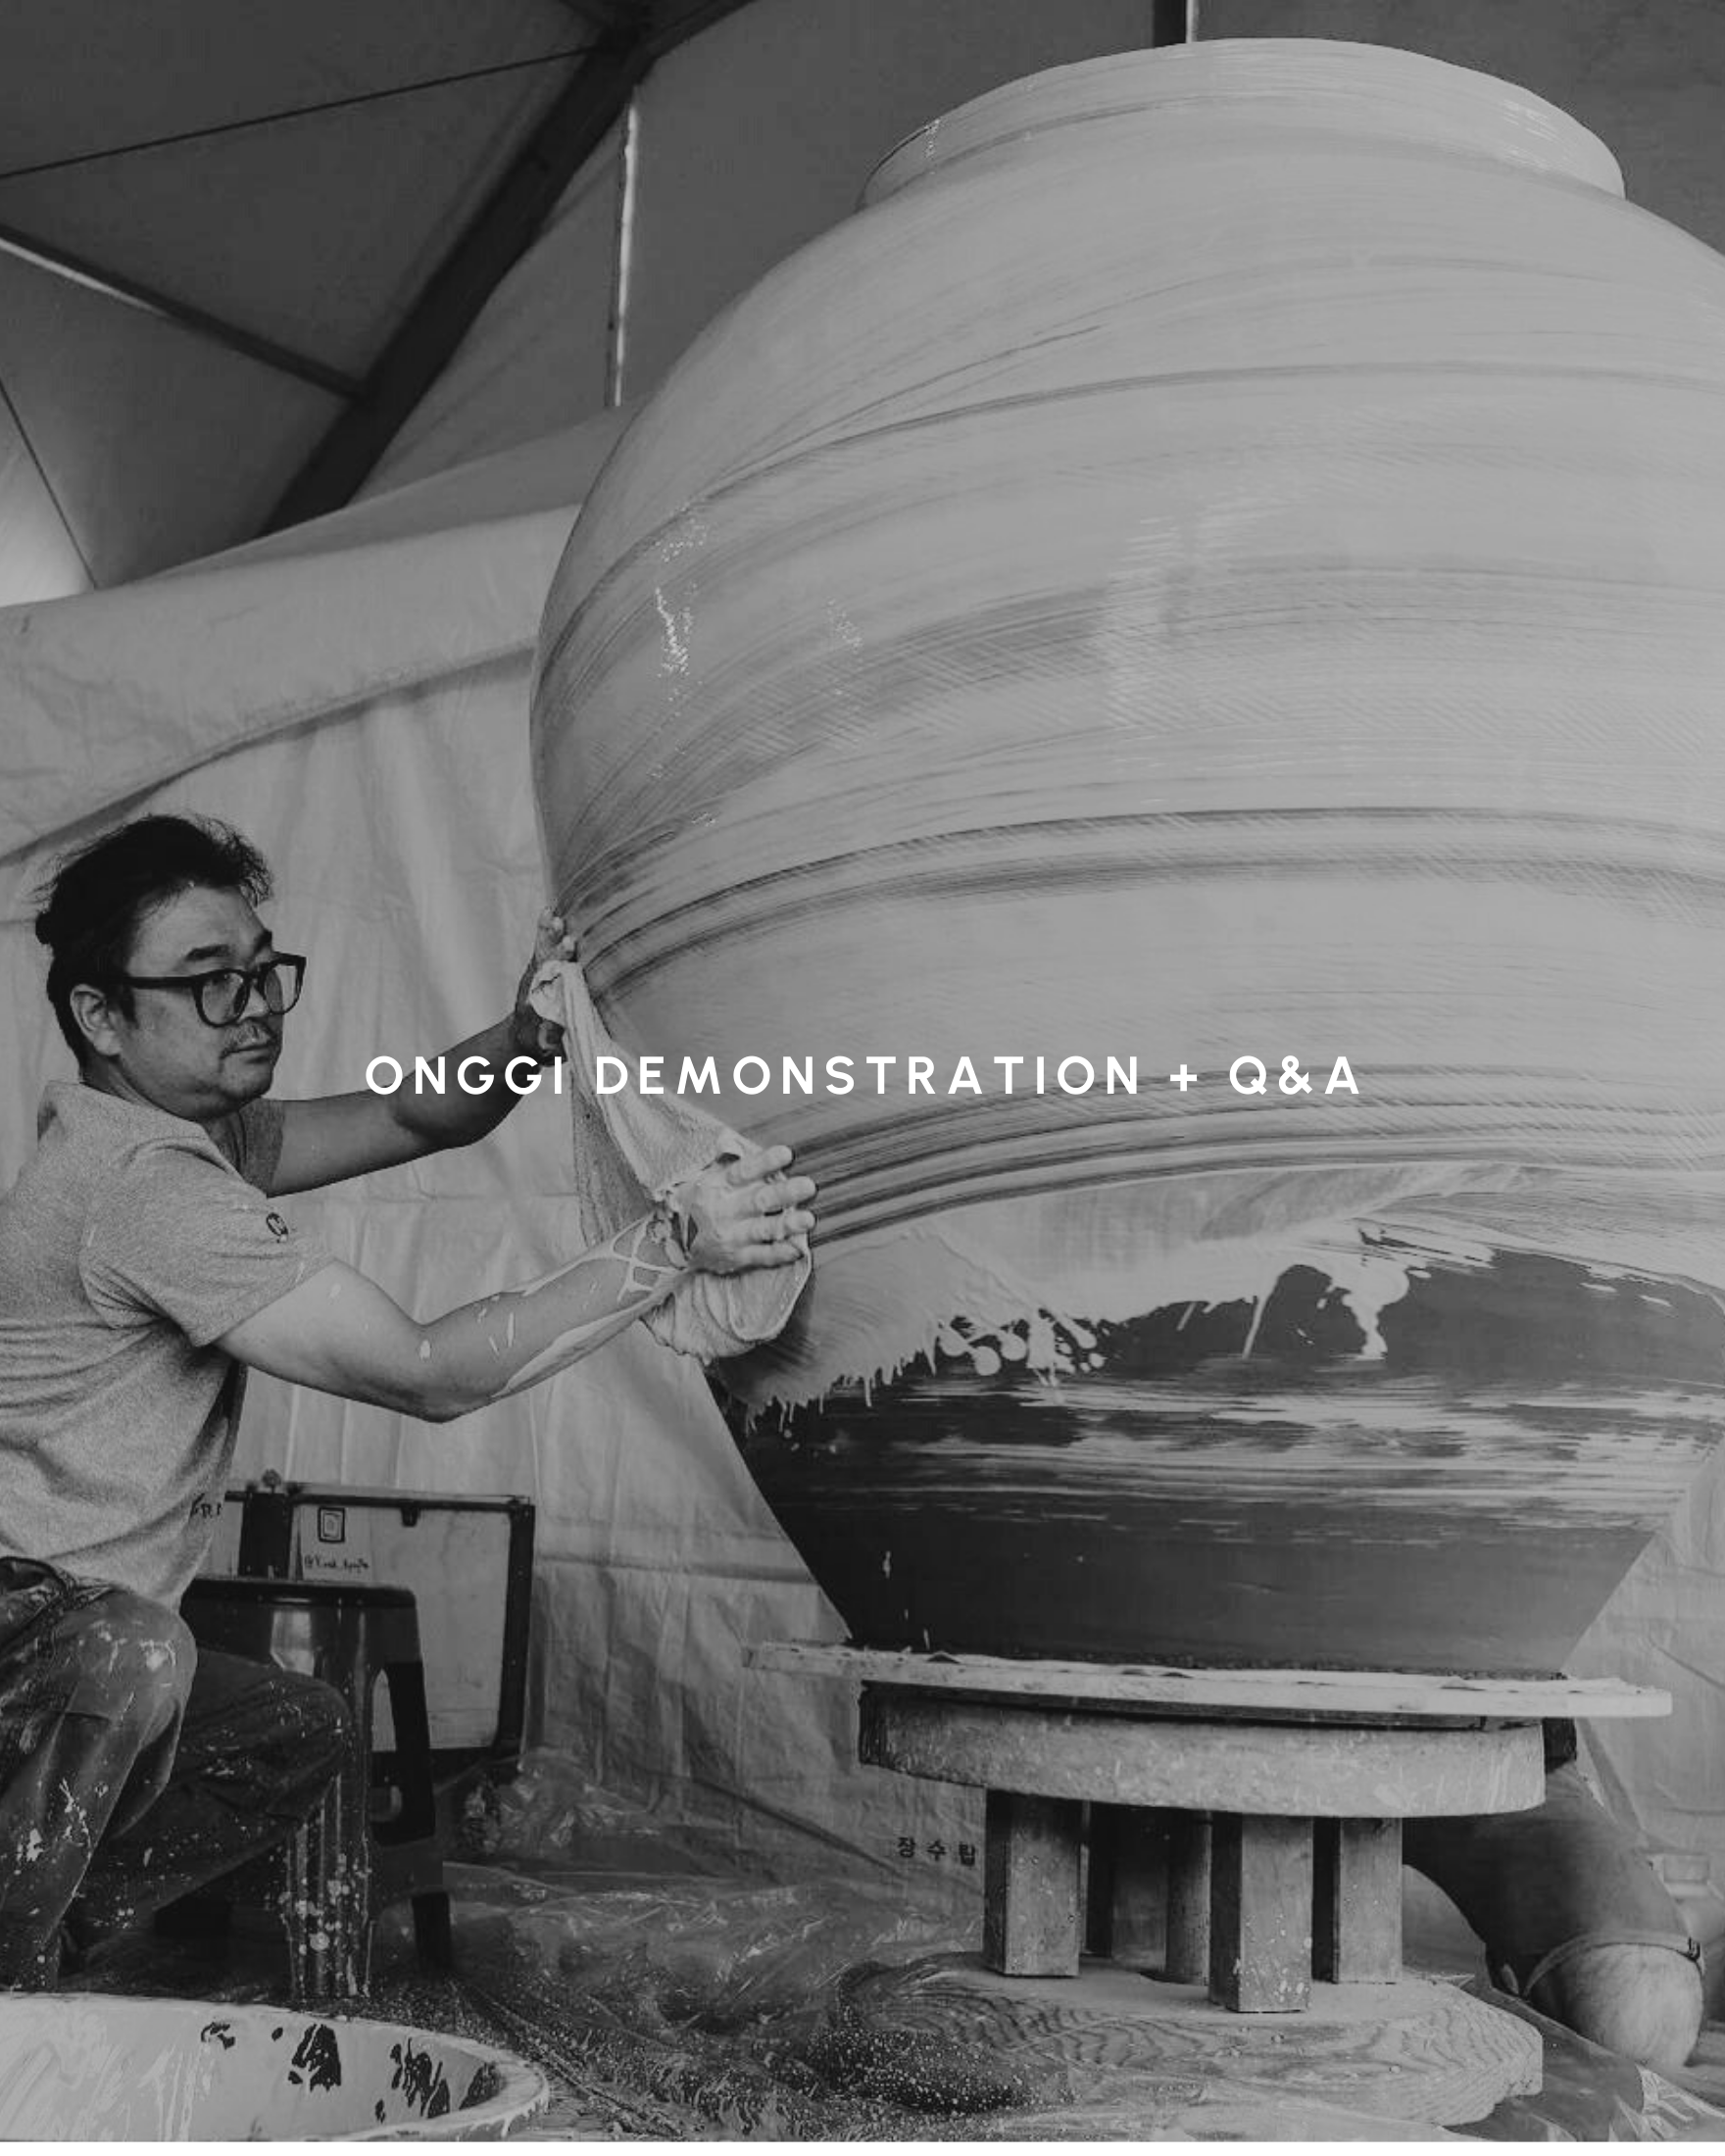 Onggi Demonstration + Q&A with Kwak Kyungtae